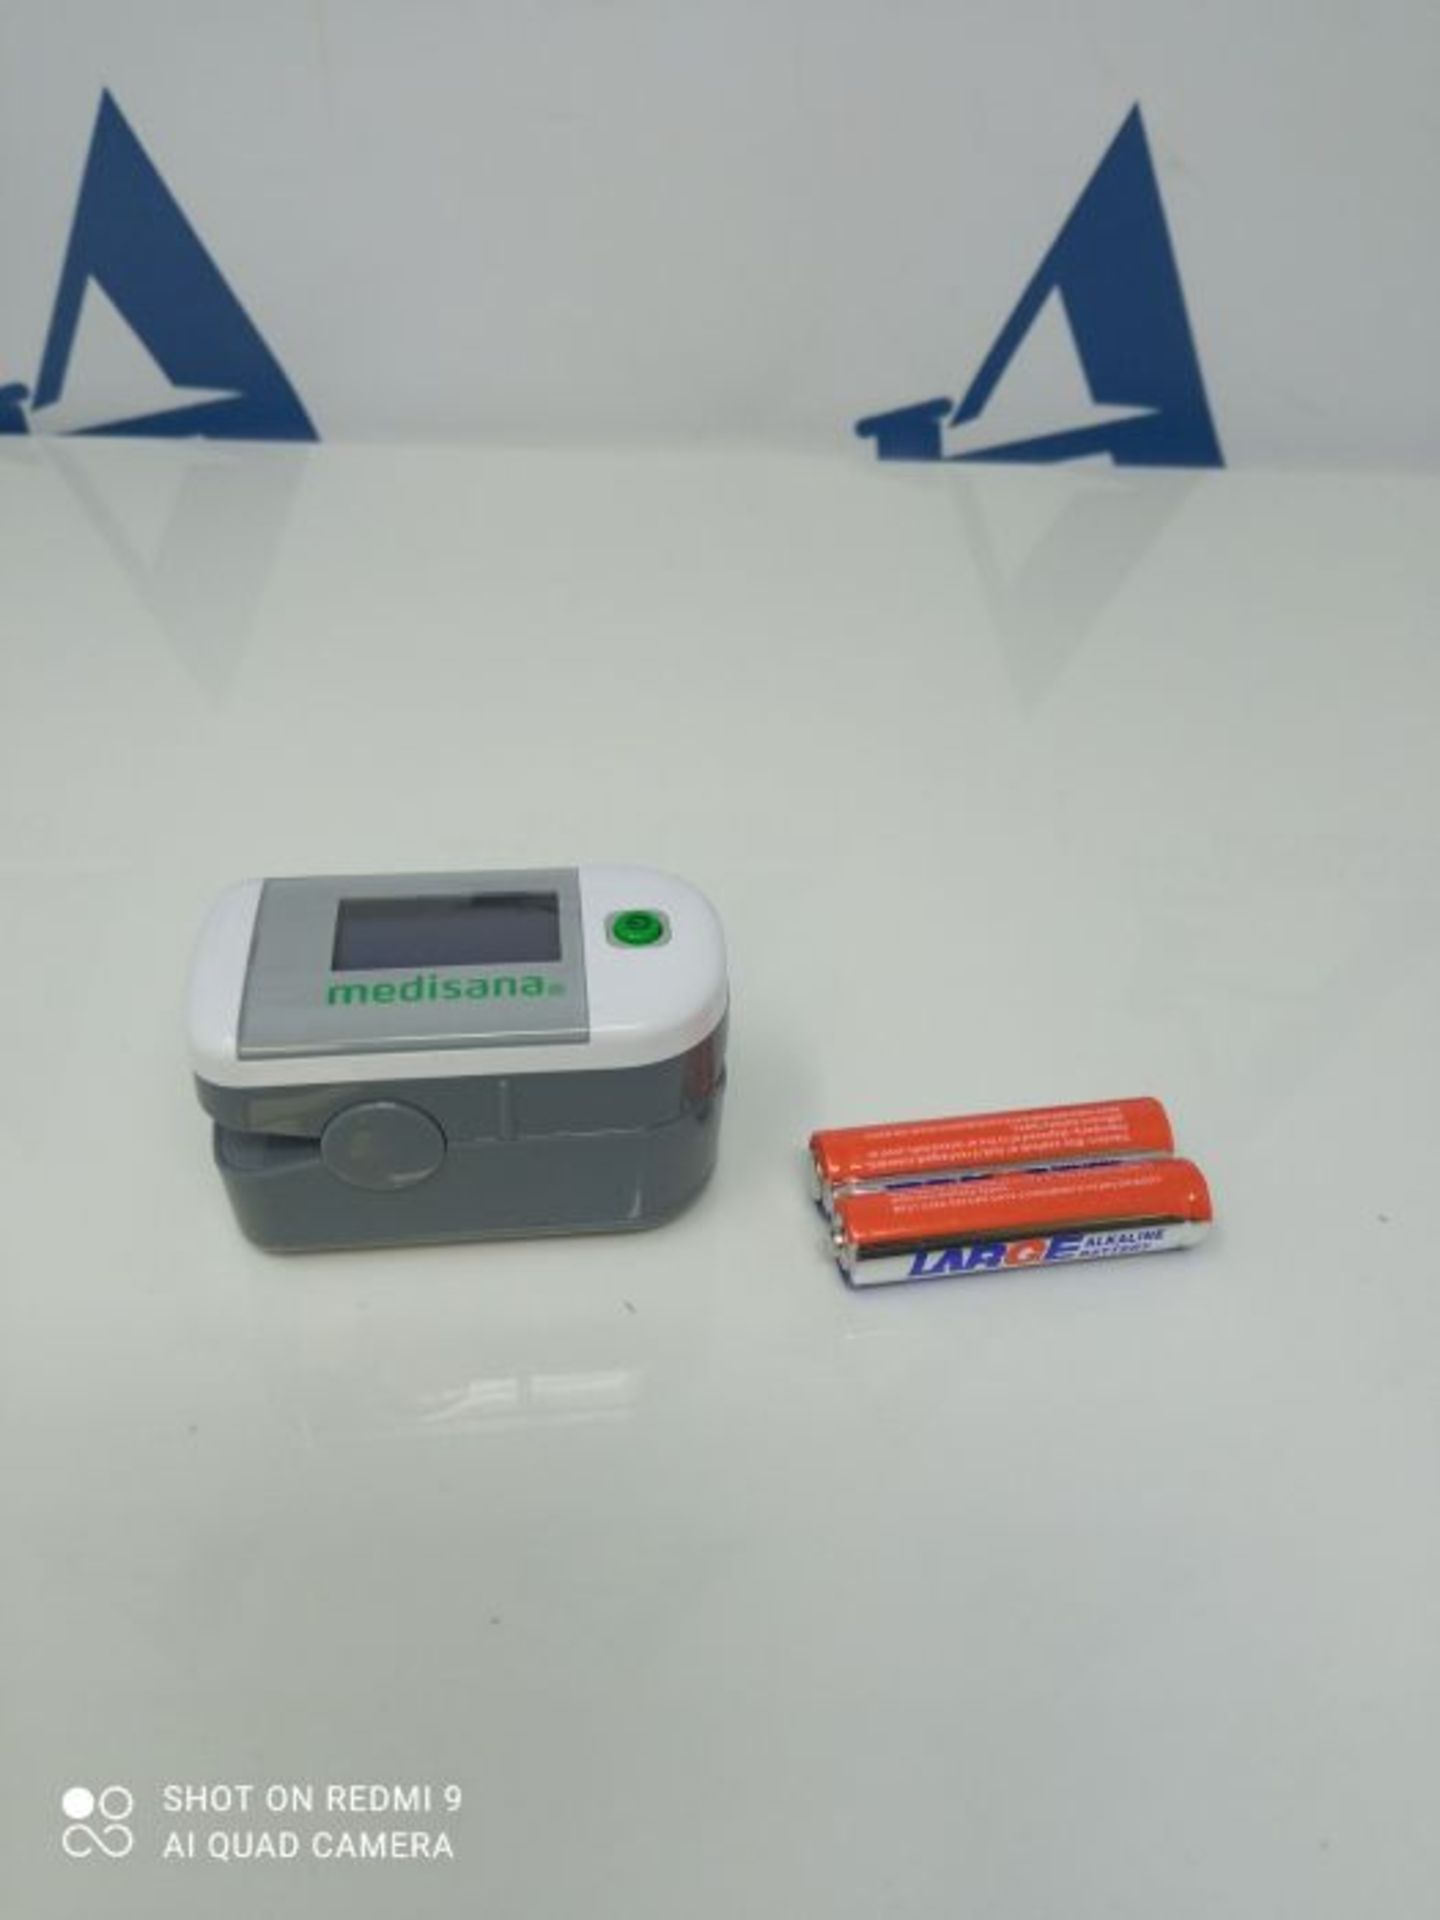 Medisana PM 100 Finger Pulse Oximeter - Precisely Measure Blood Oxygen Saturation + He - Image 3 of 3